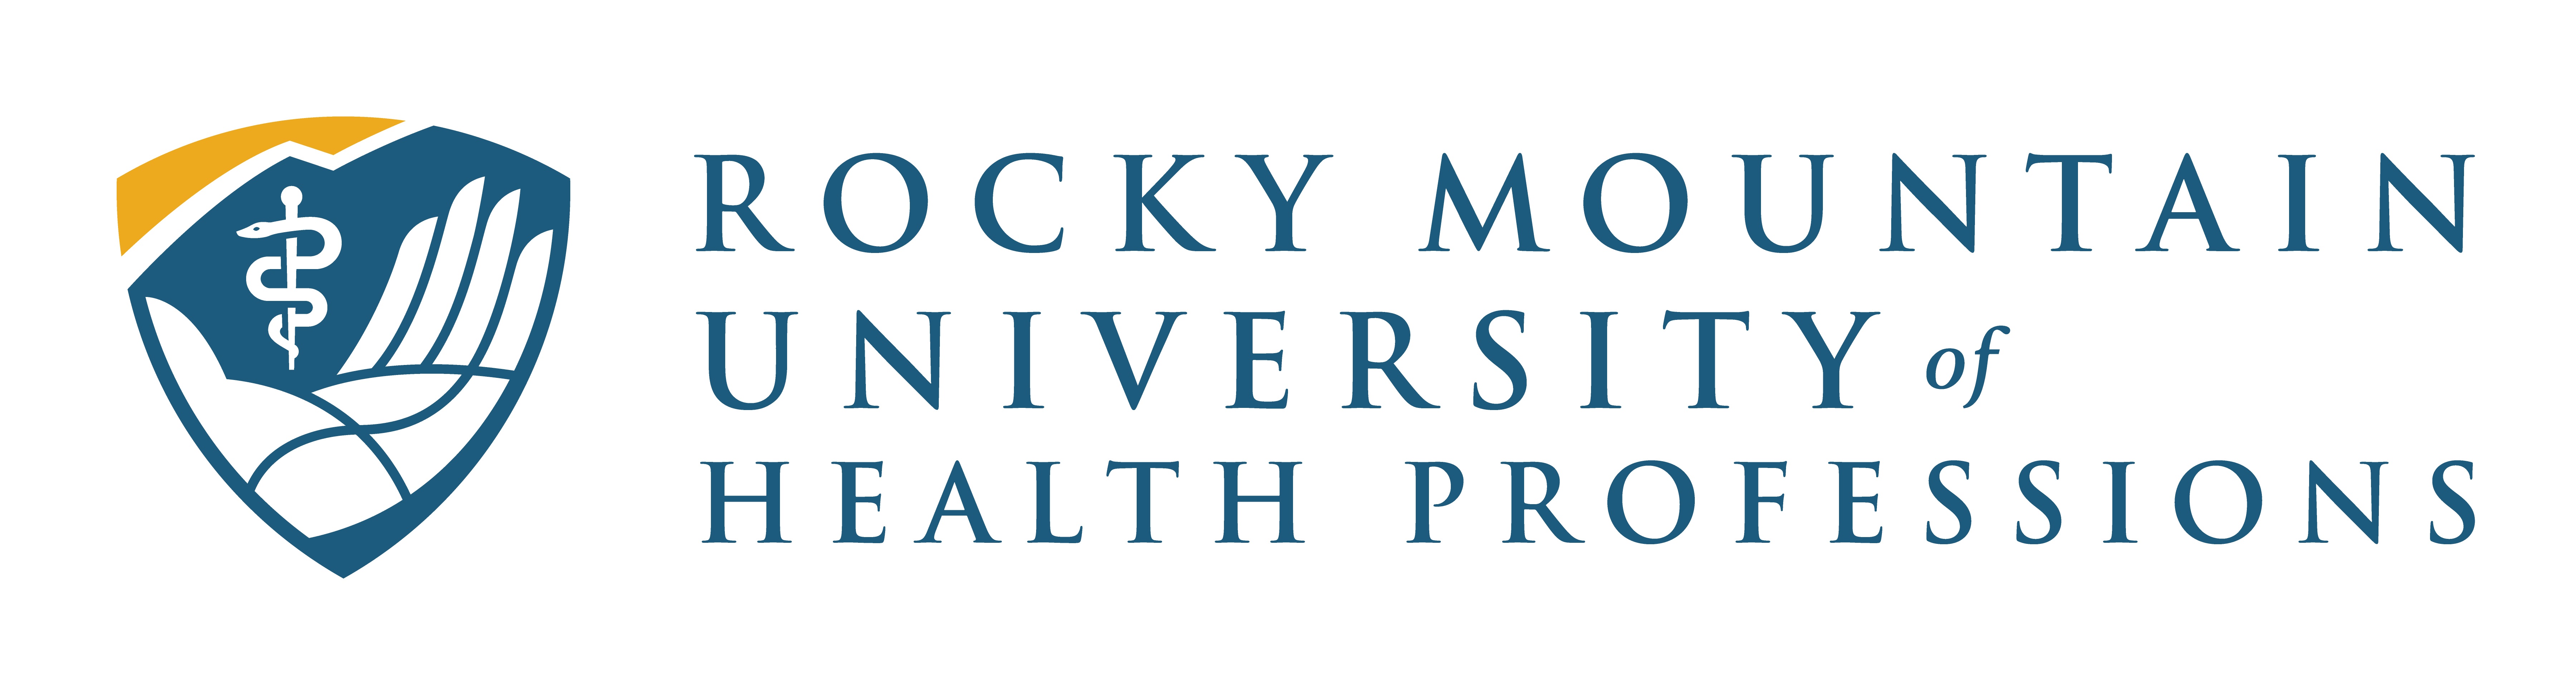 Rocky Mountain University of Health Professions logo